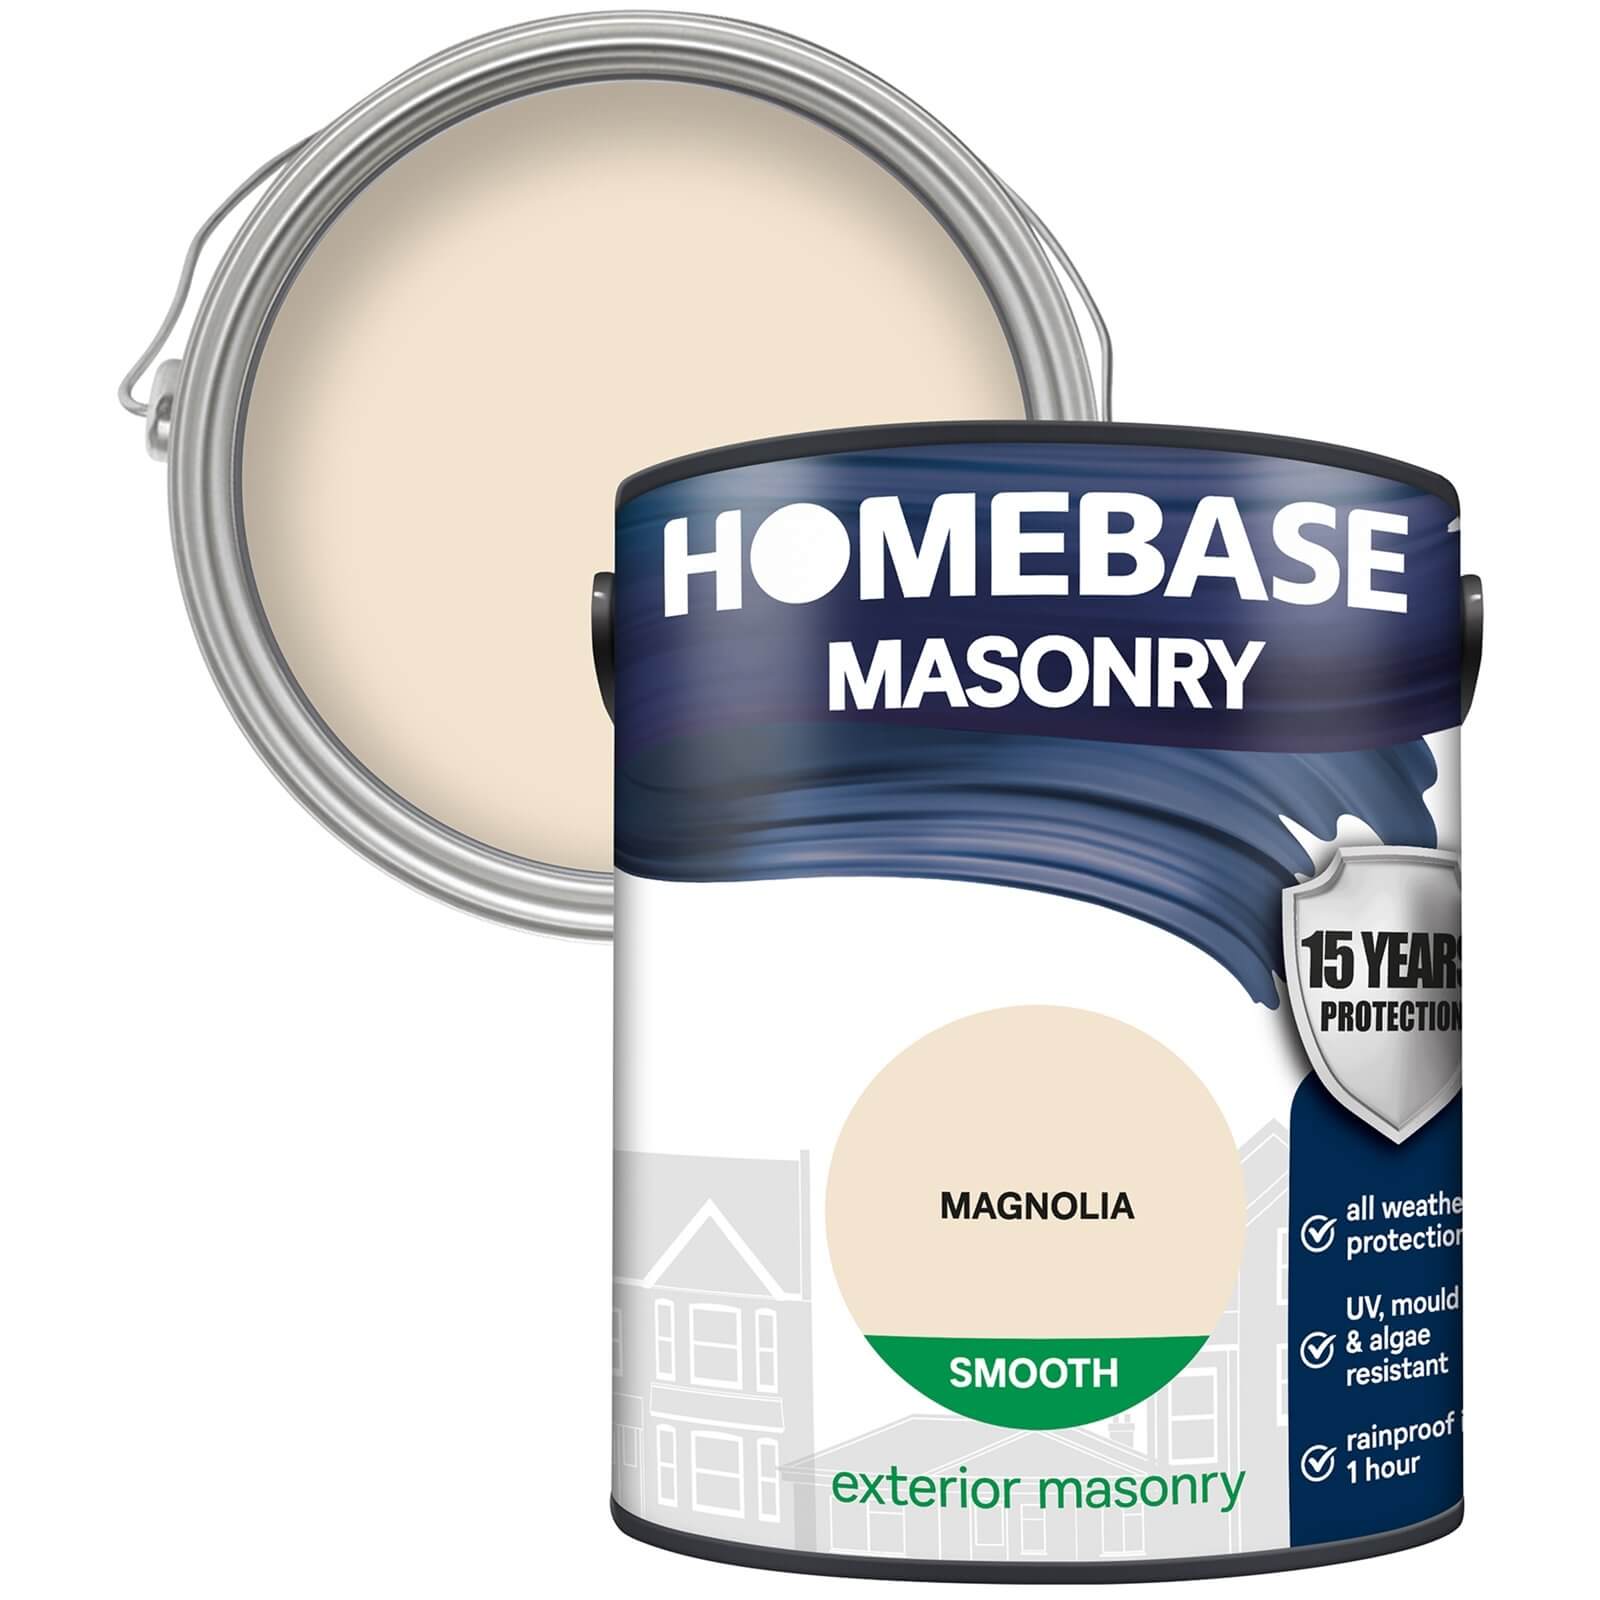 Homebase Smooth Masonry Paint - Magnolia 5L